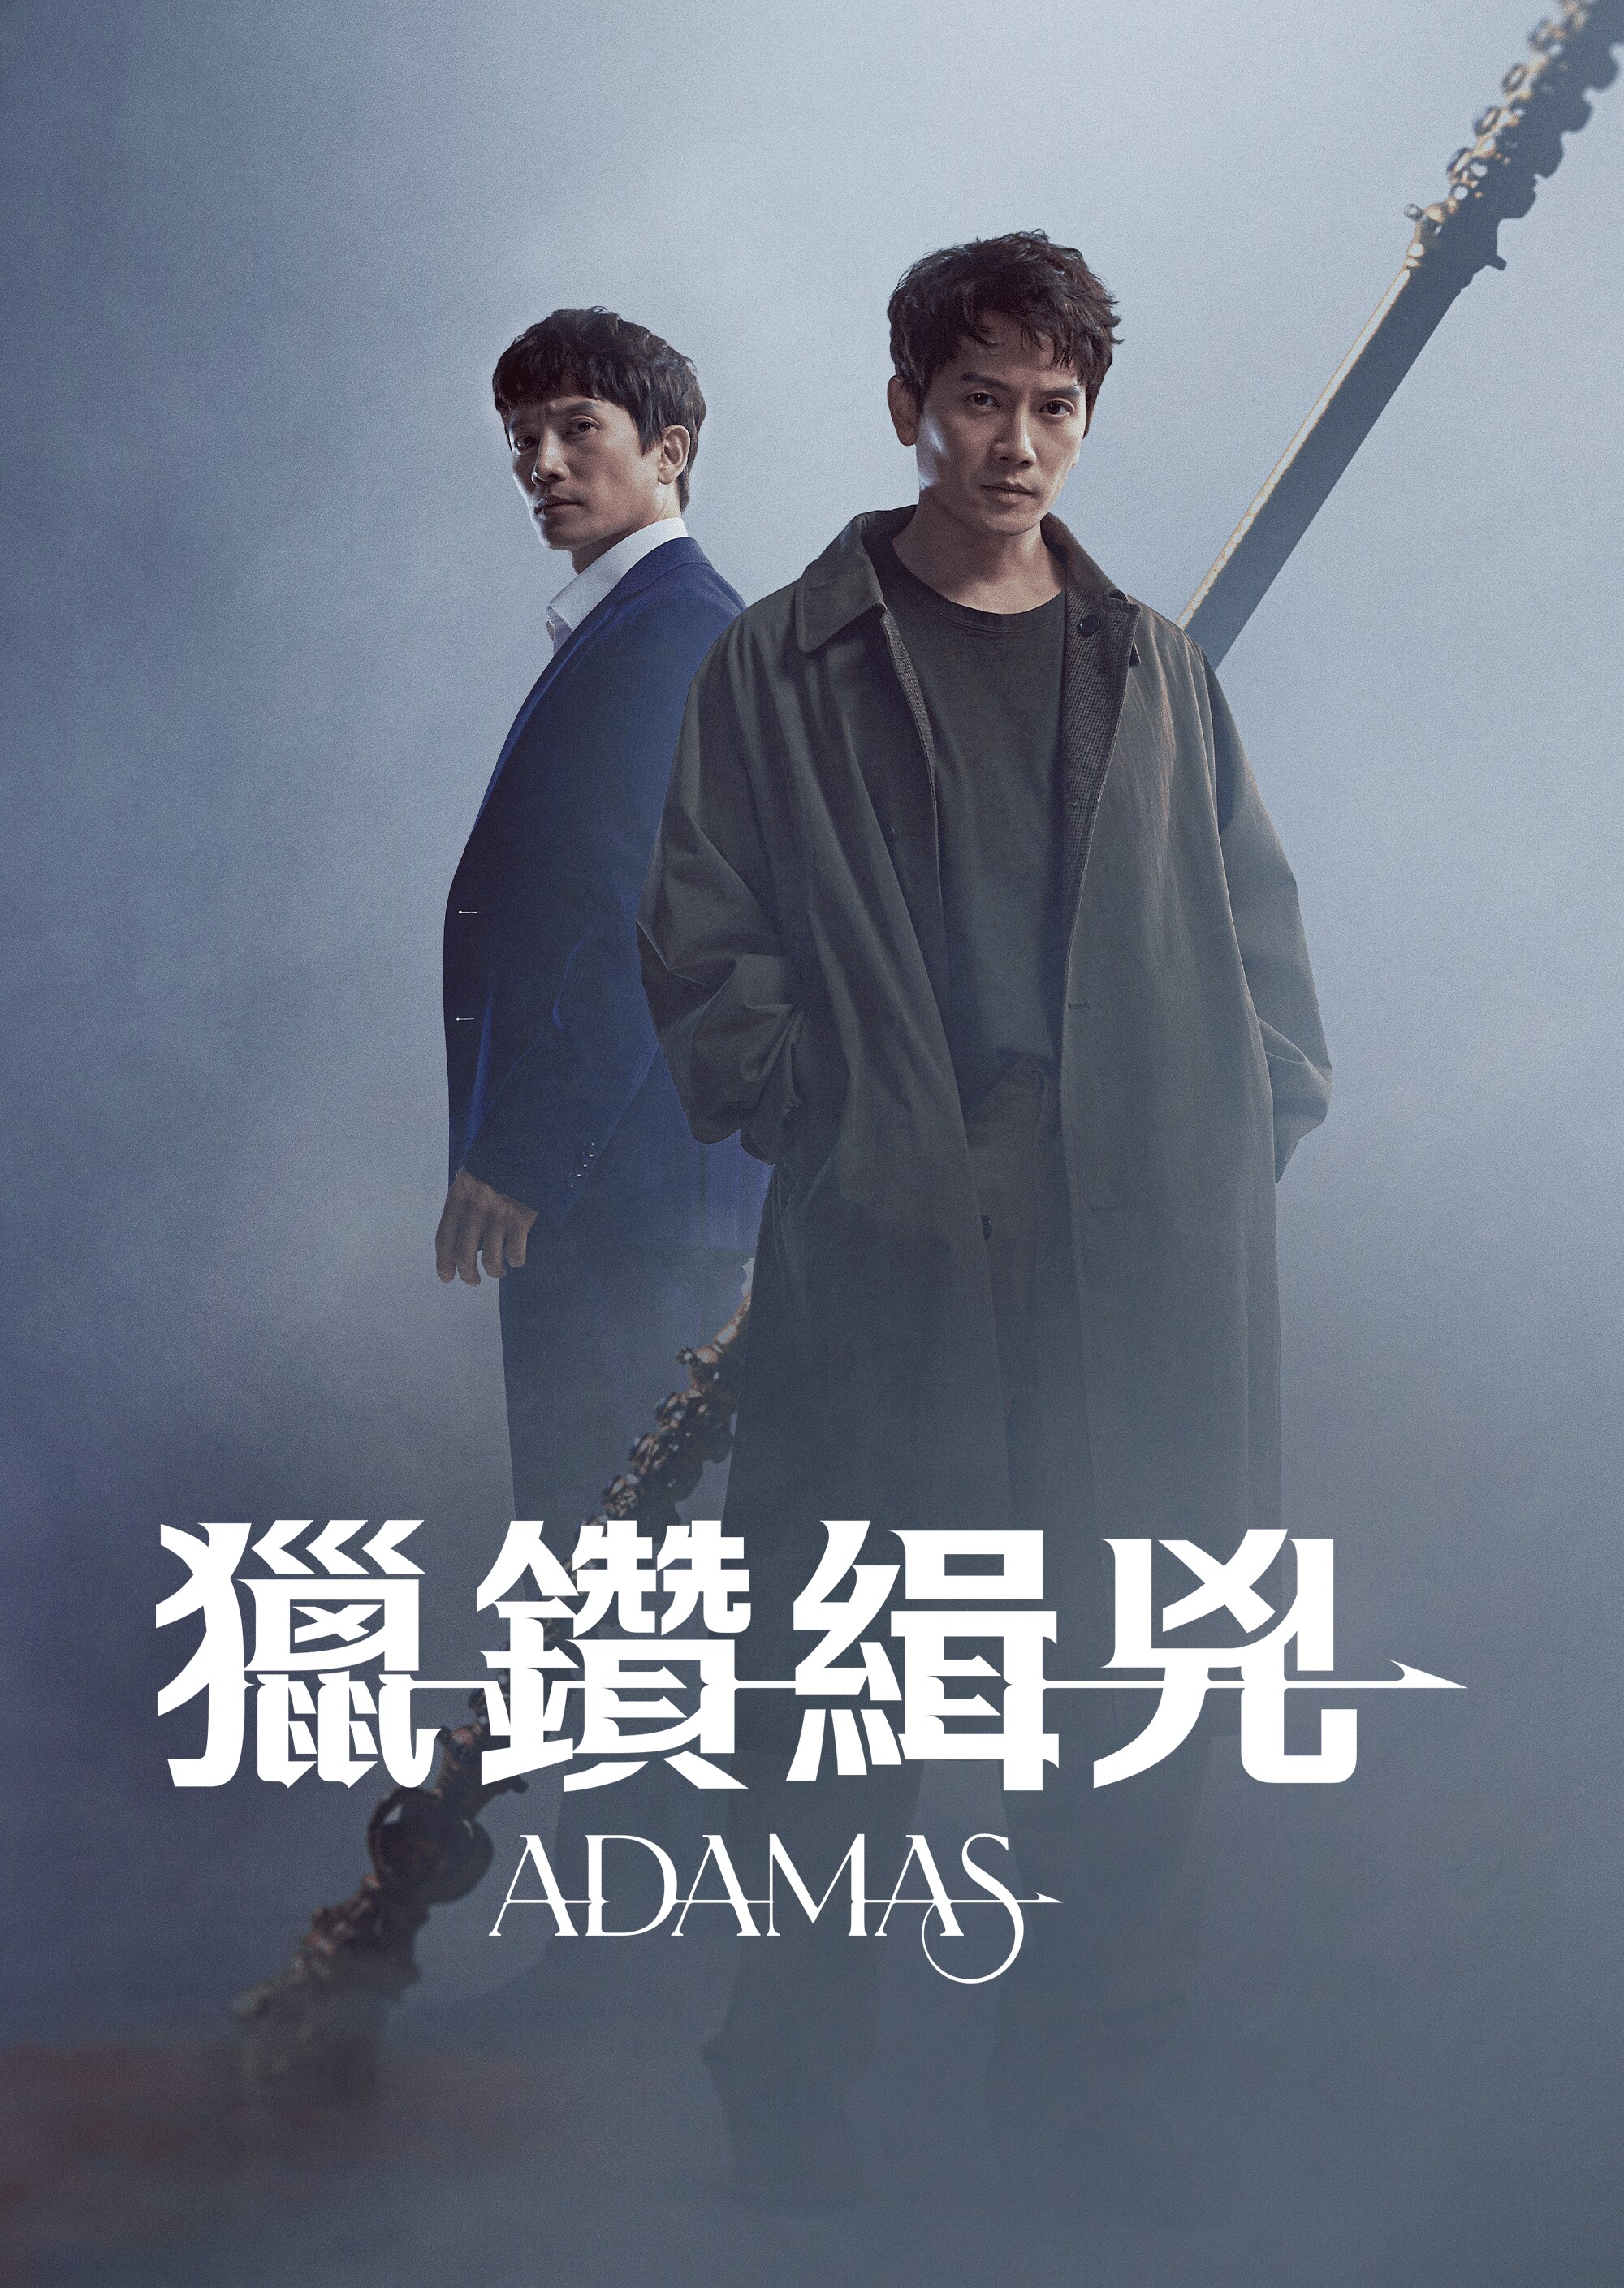 Adamas | now streaming